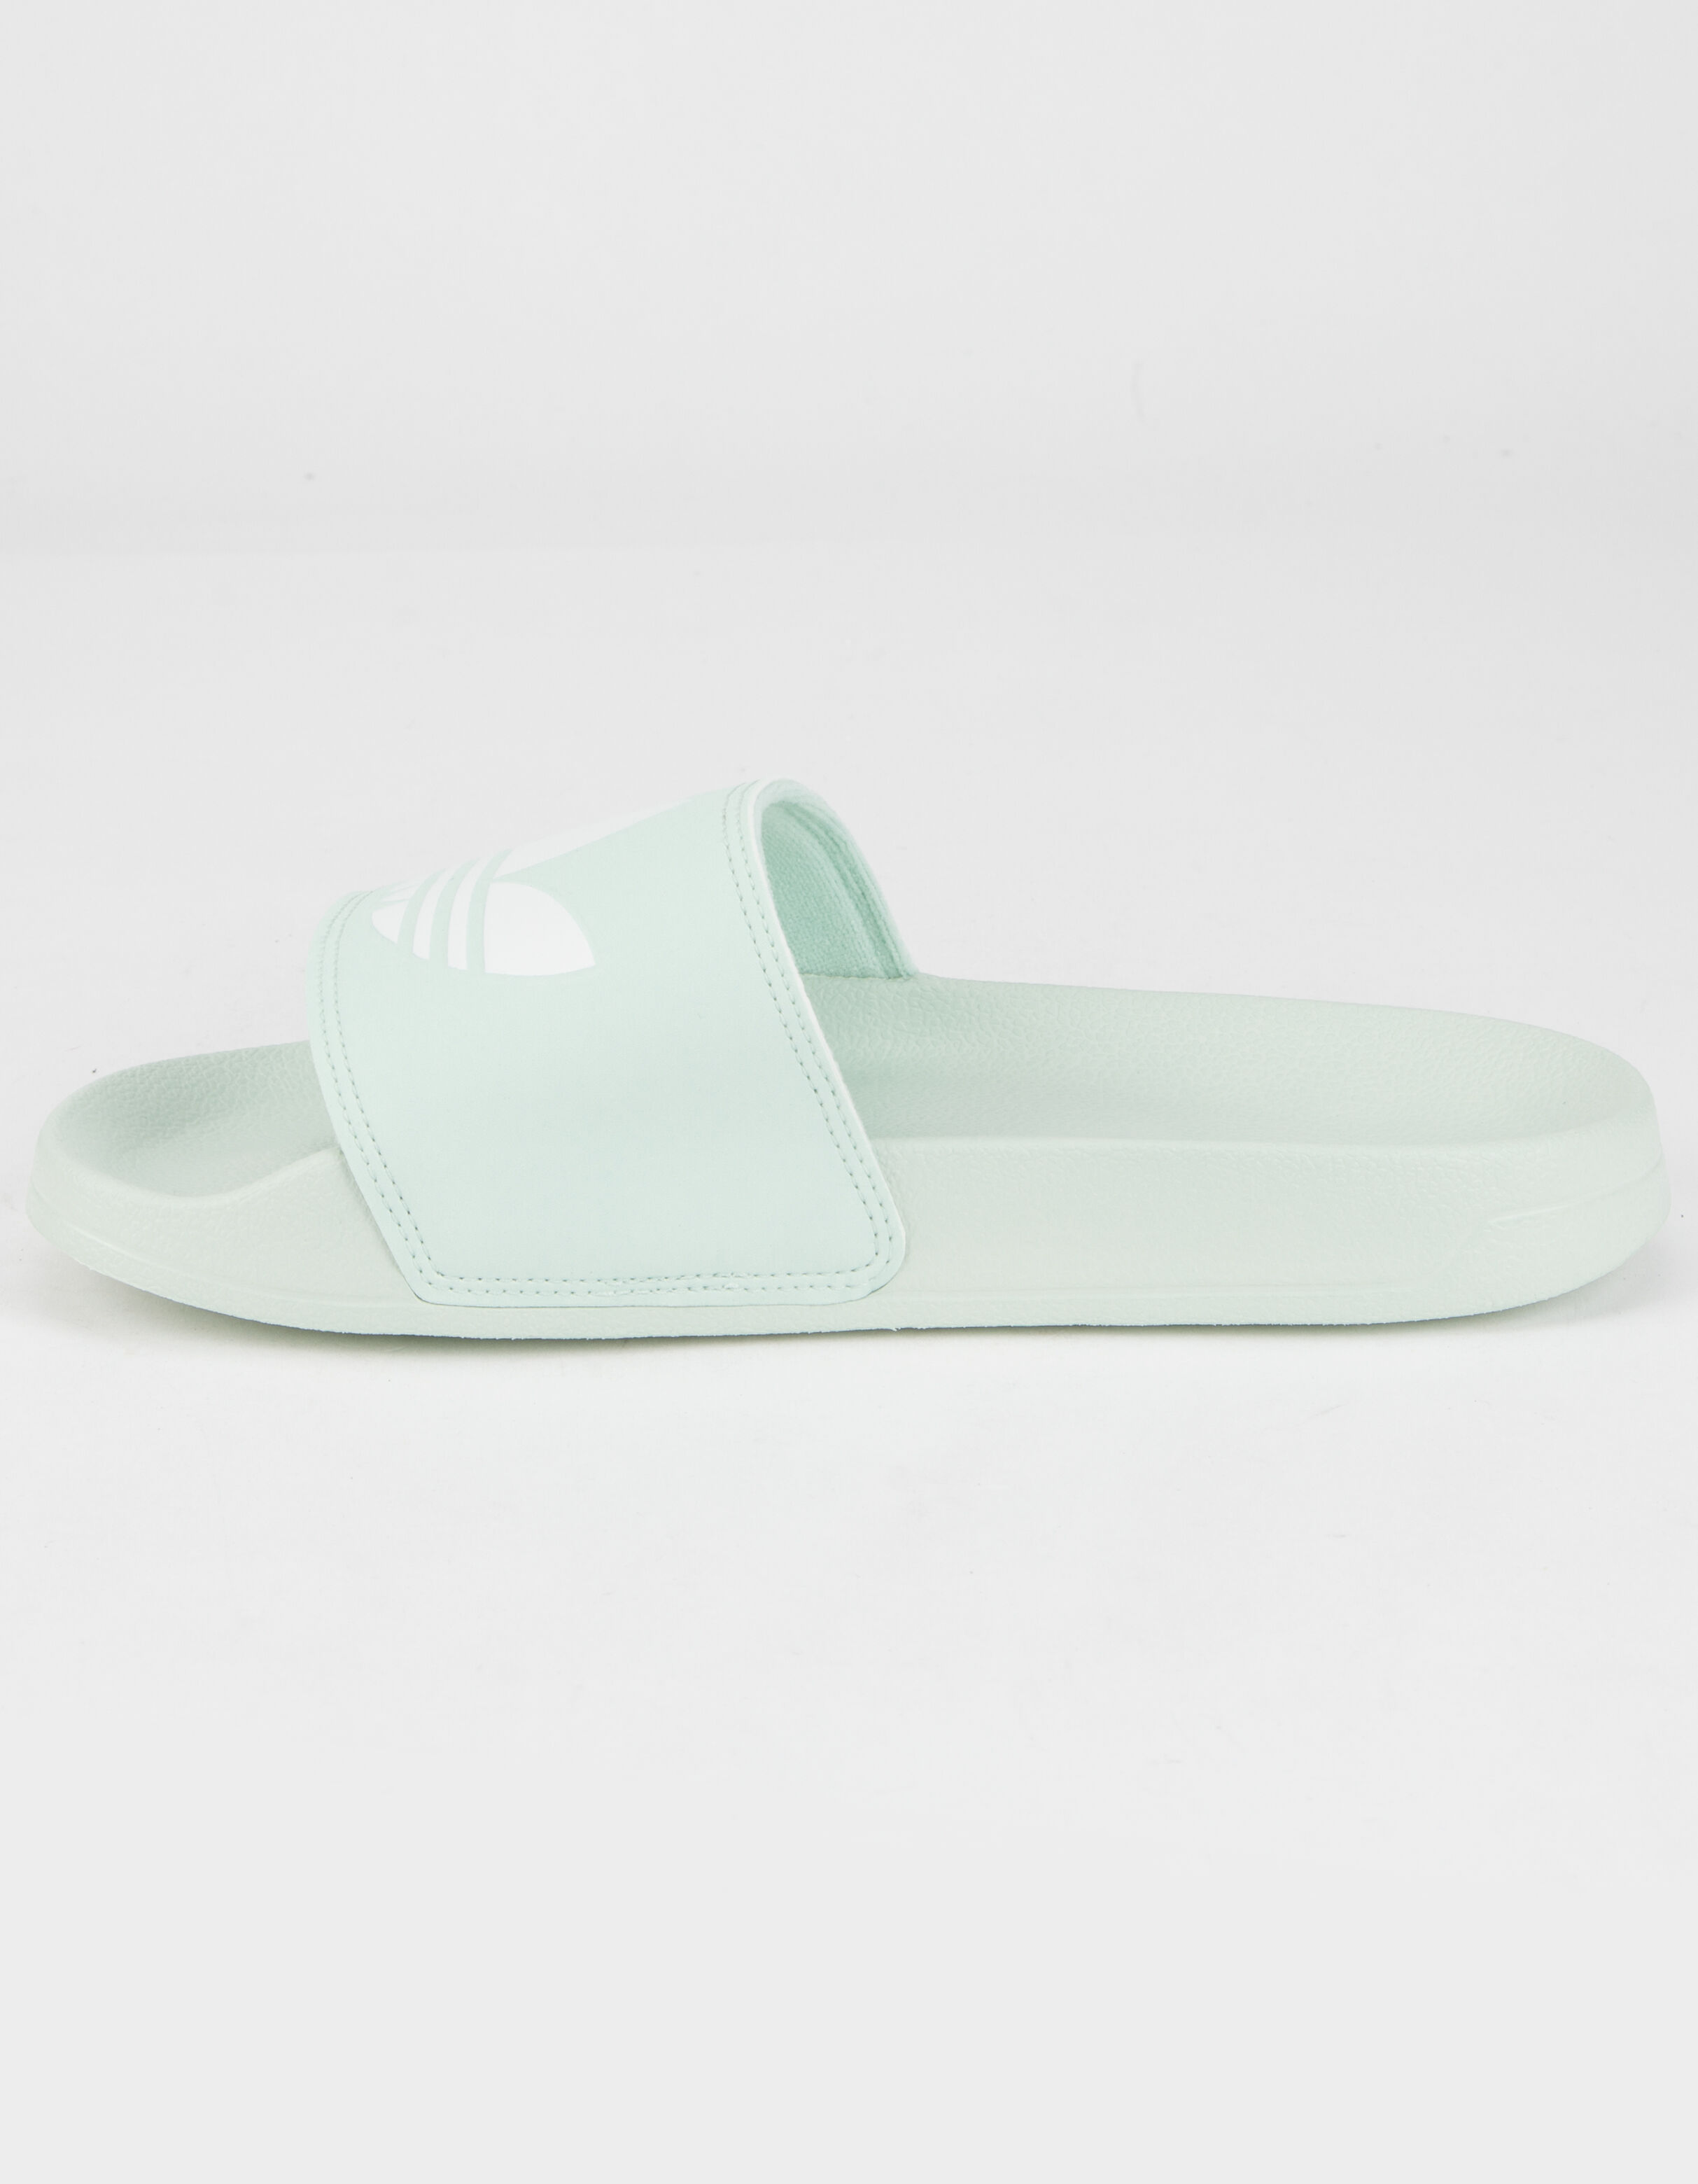 ADIDAS Adilette Lite Womens Mint Slide Sandals - MINT | Tillys